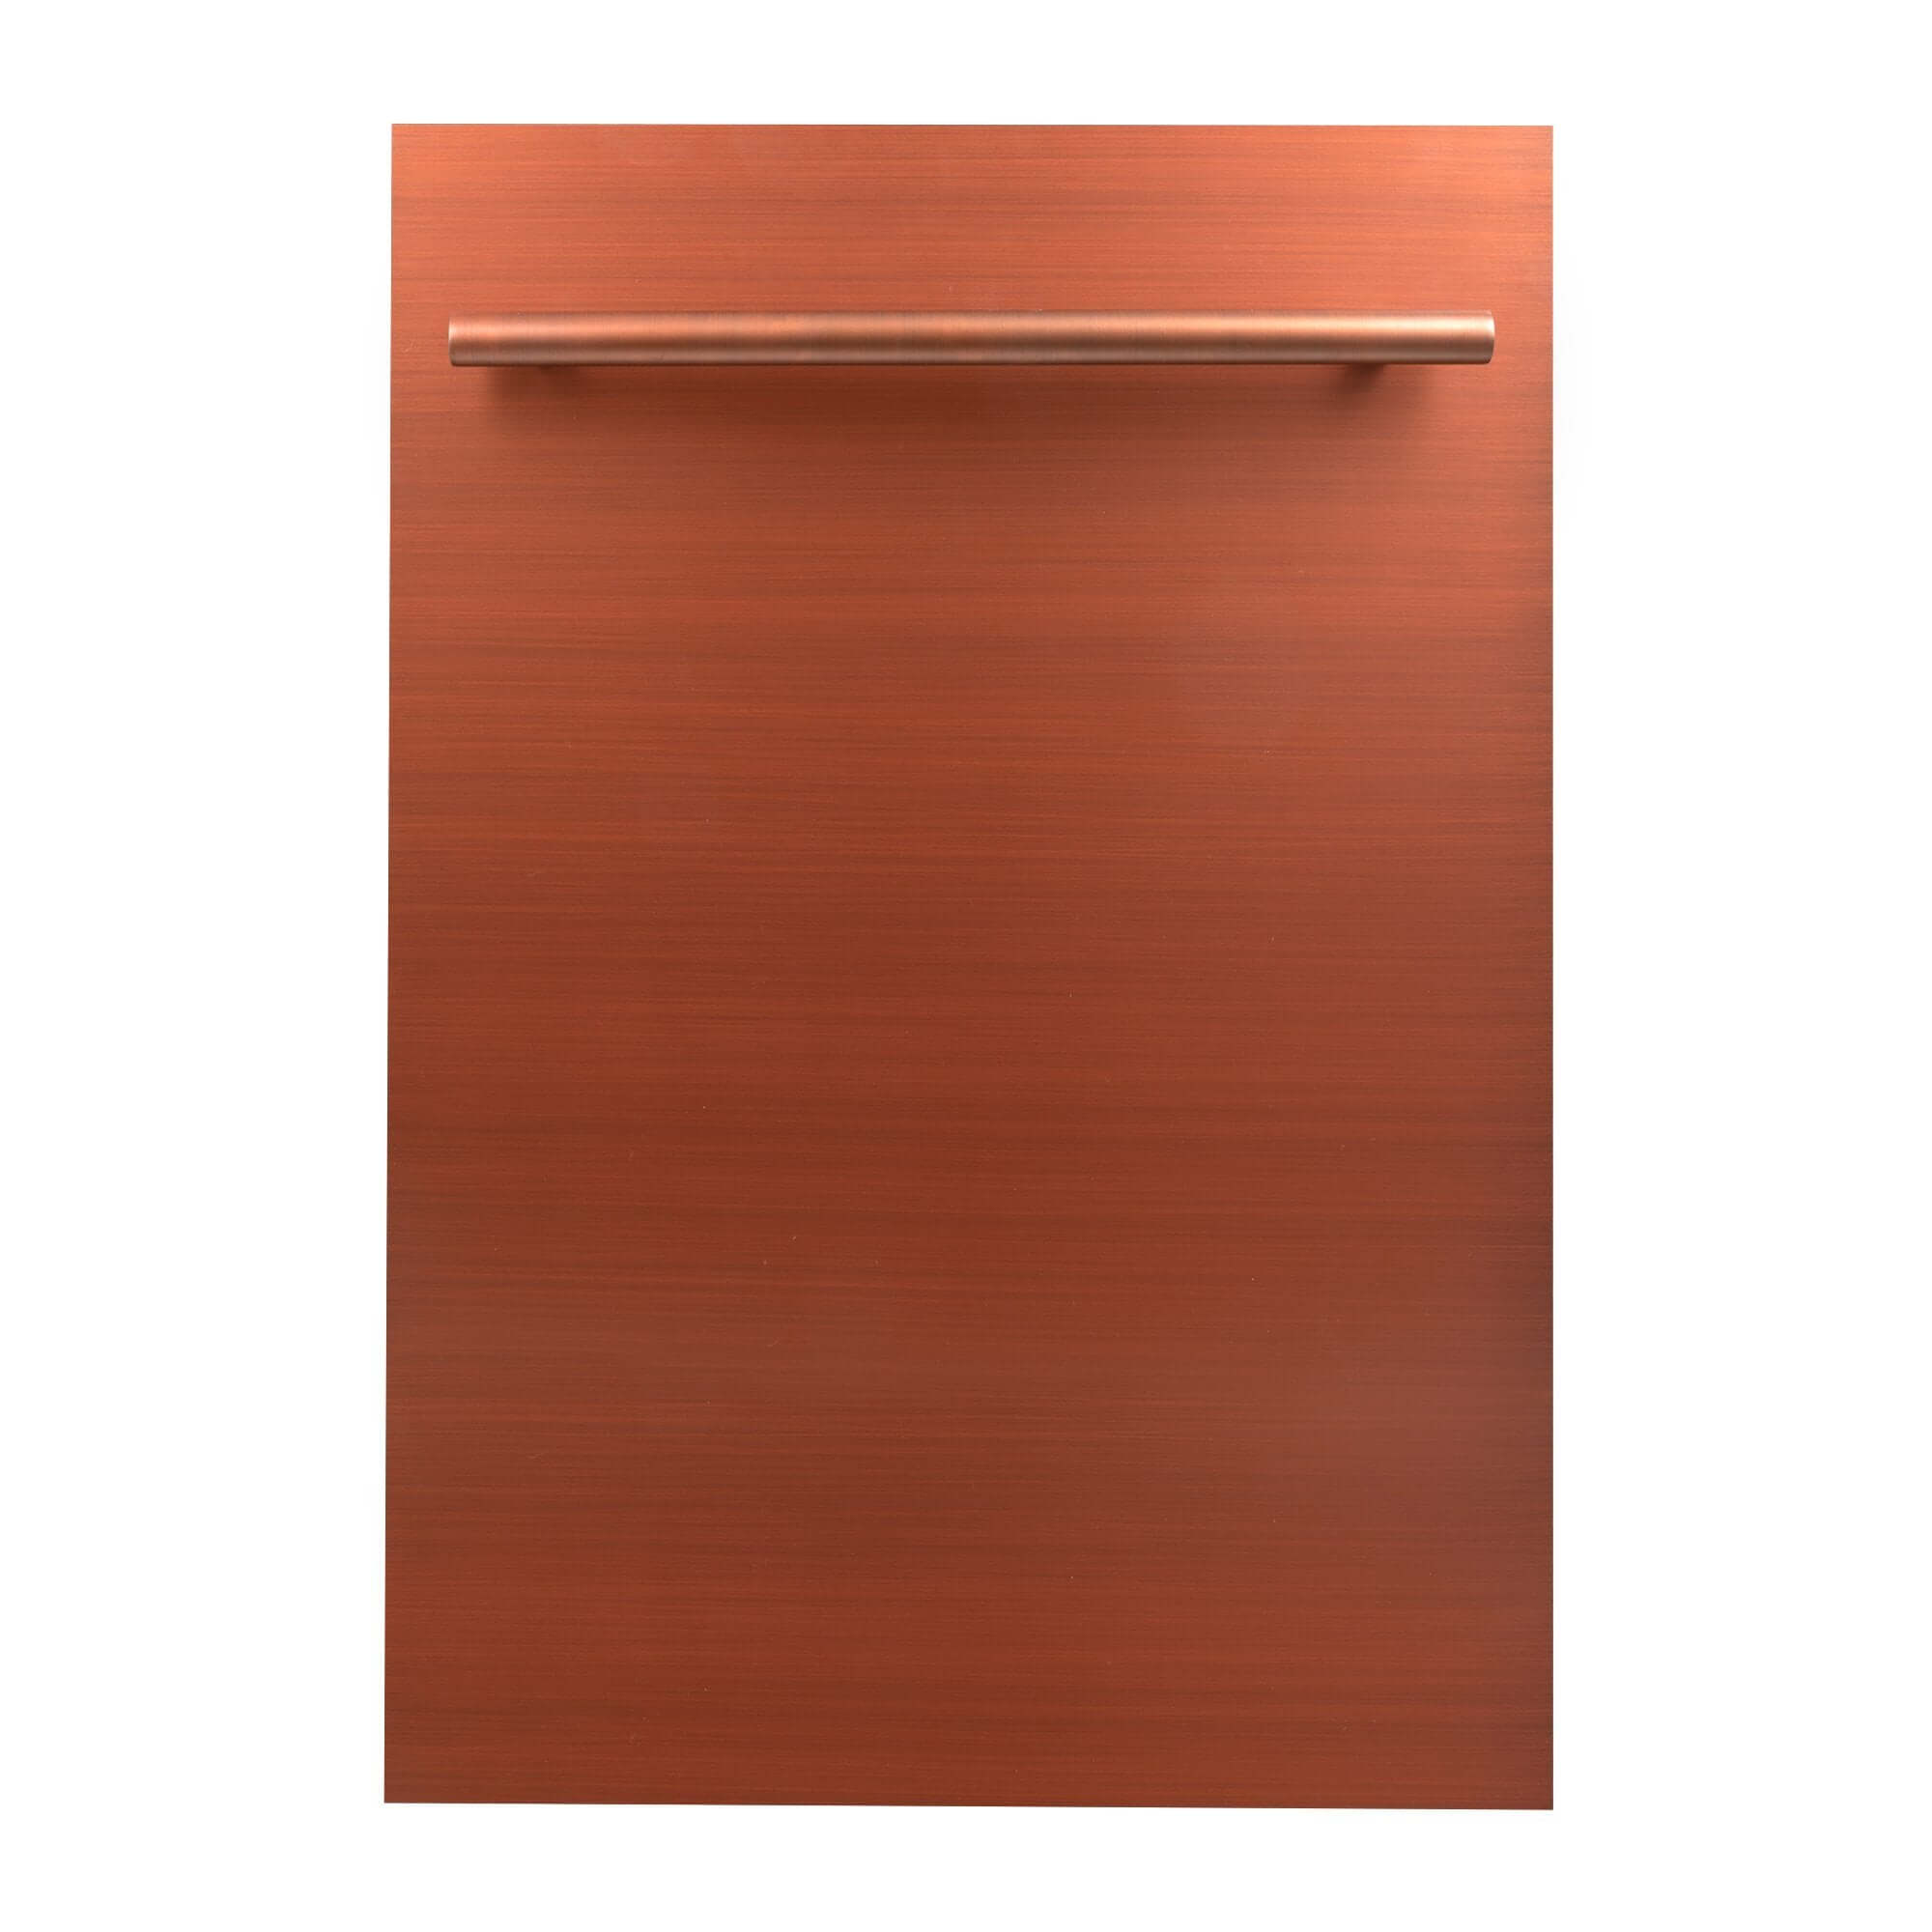 ZLINE 18" Dishwasher Panel with Modern Handle - Copper